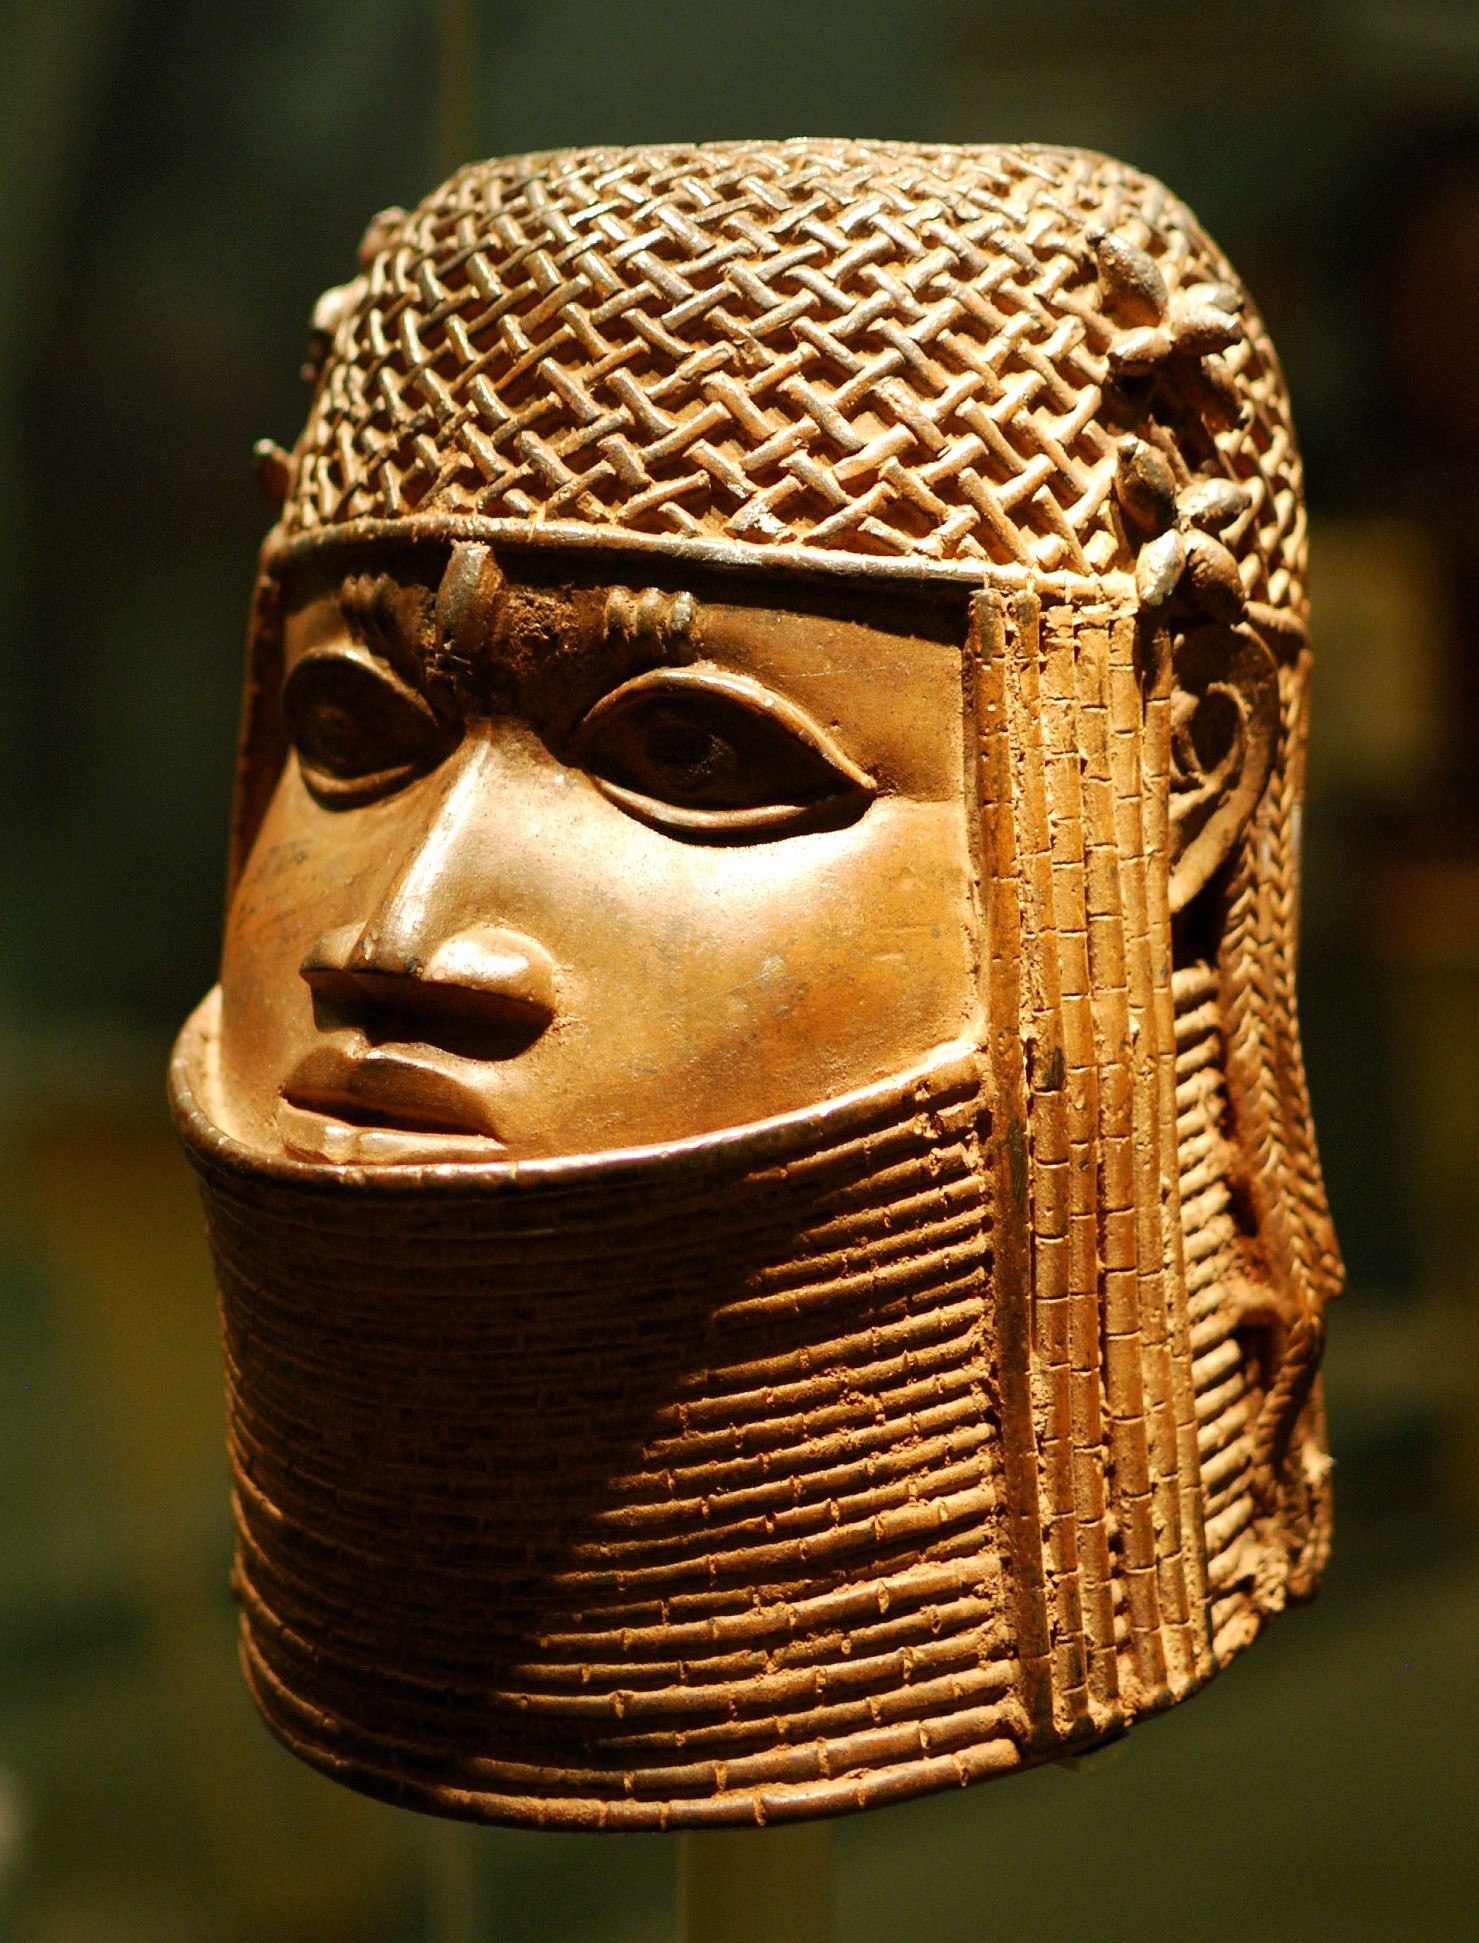 Stolen artifacts: Oba of Benin disowns impostors